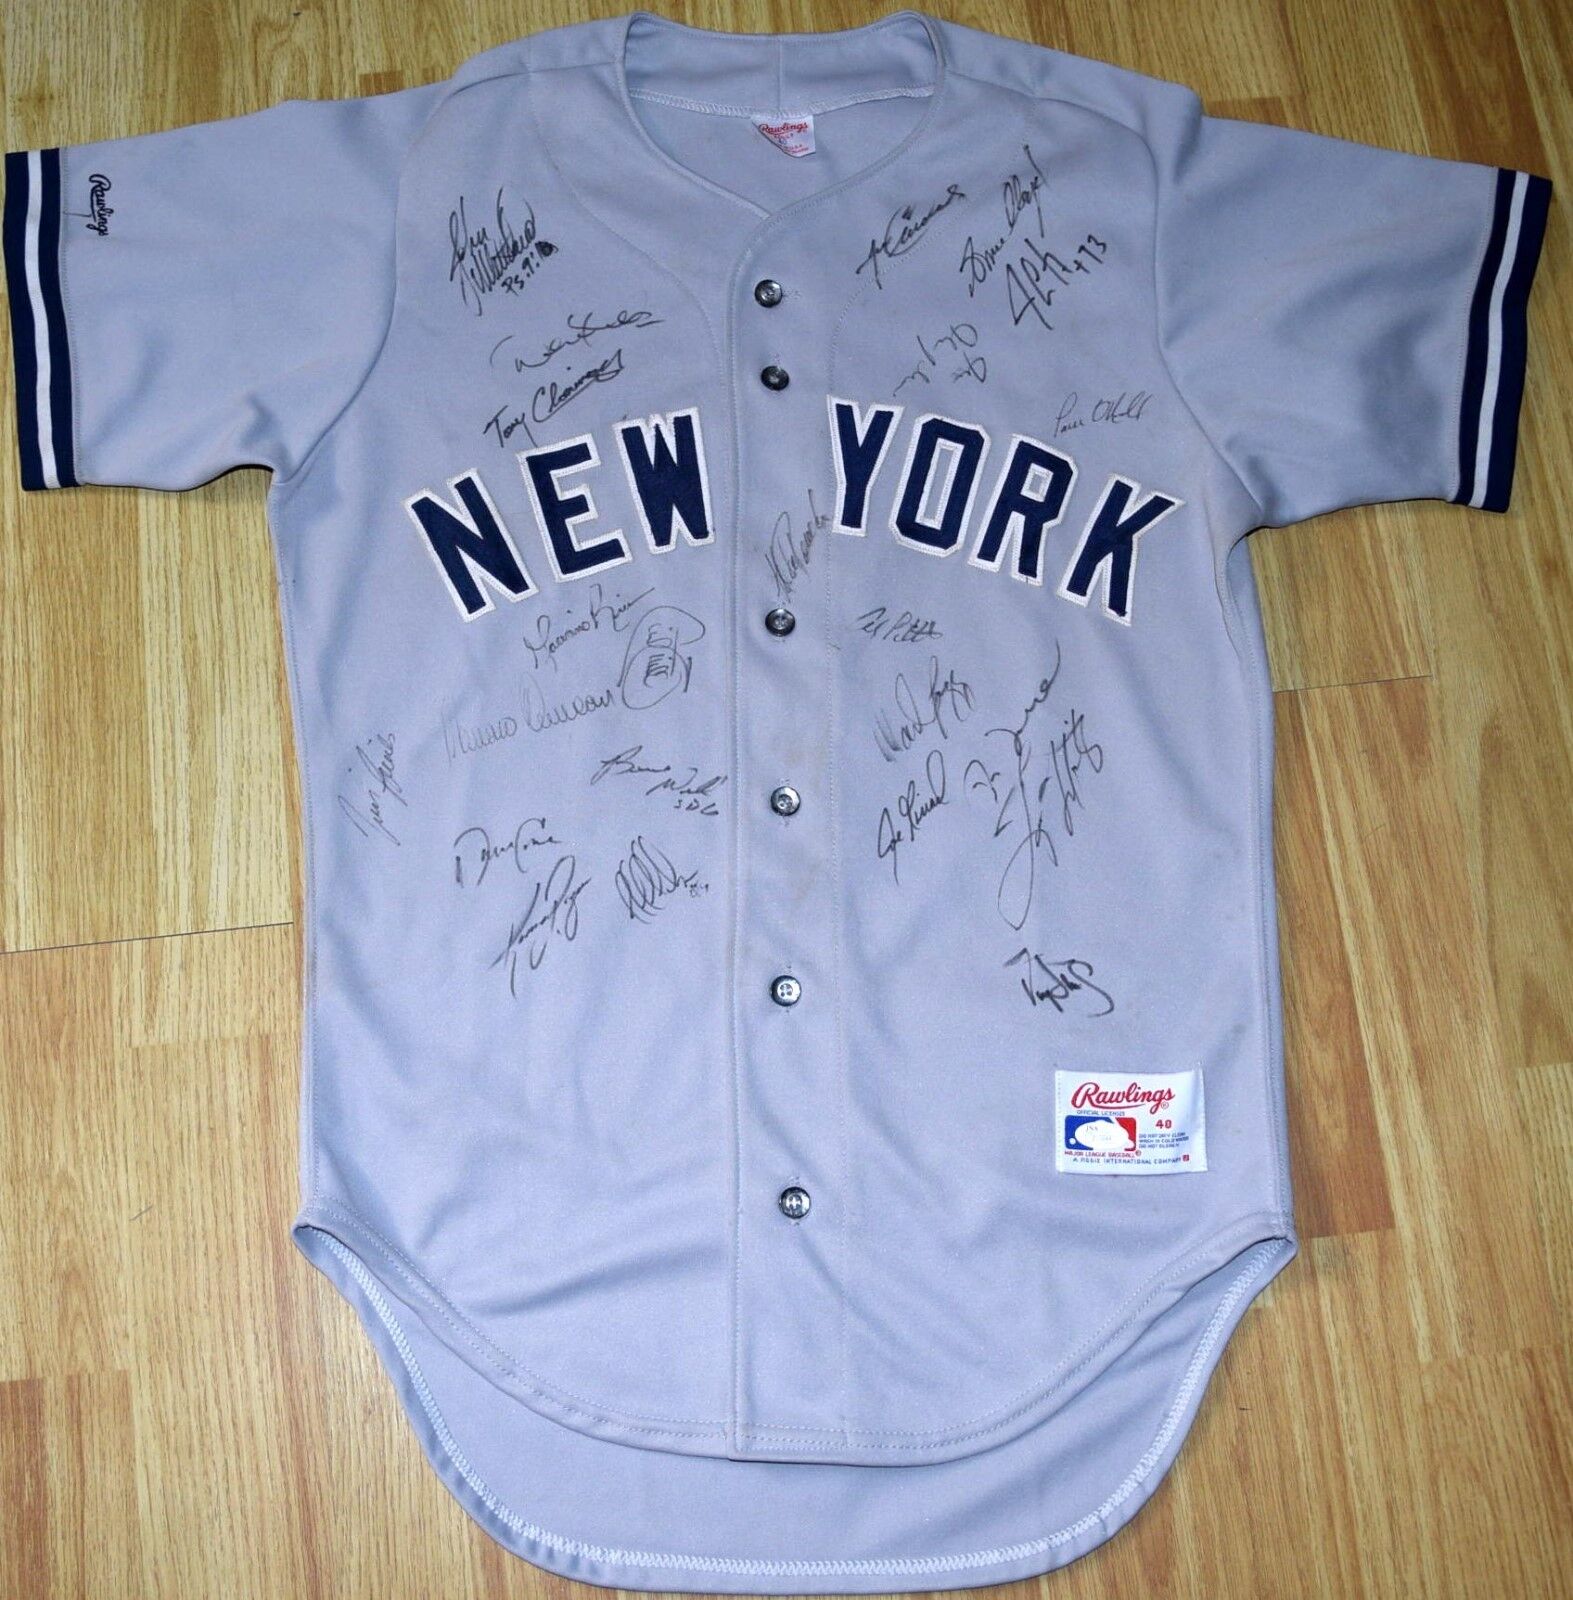 Derek JETER Mariano Rivera CONE Torre RAINES Signed 1996 Yankees JERSEY JSA LOA